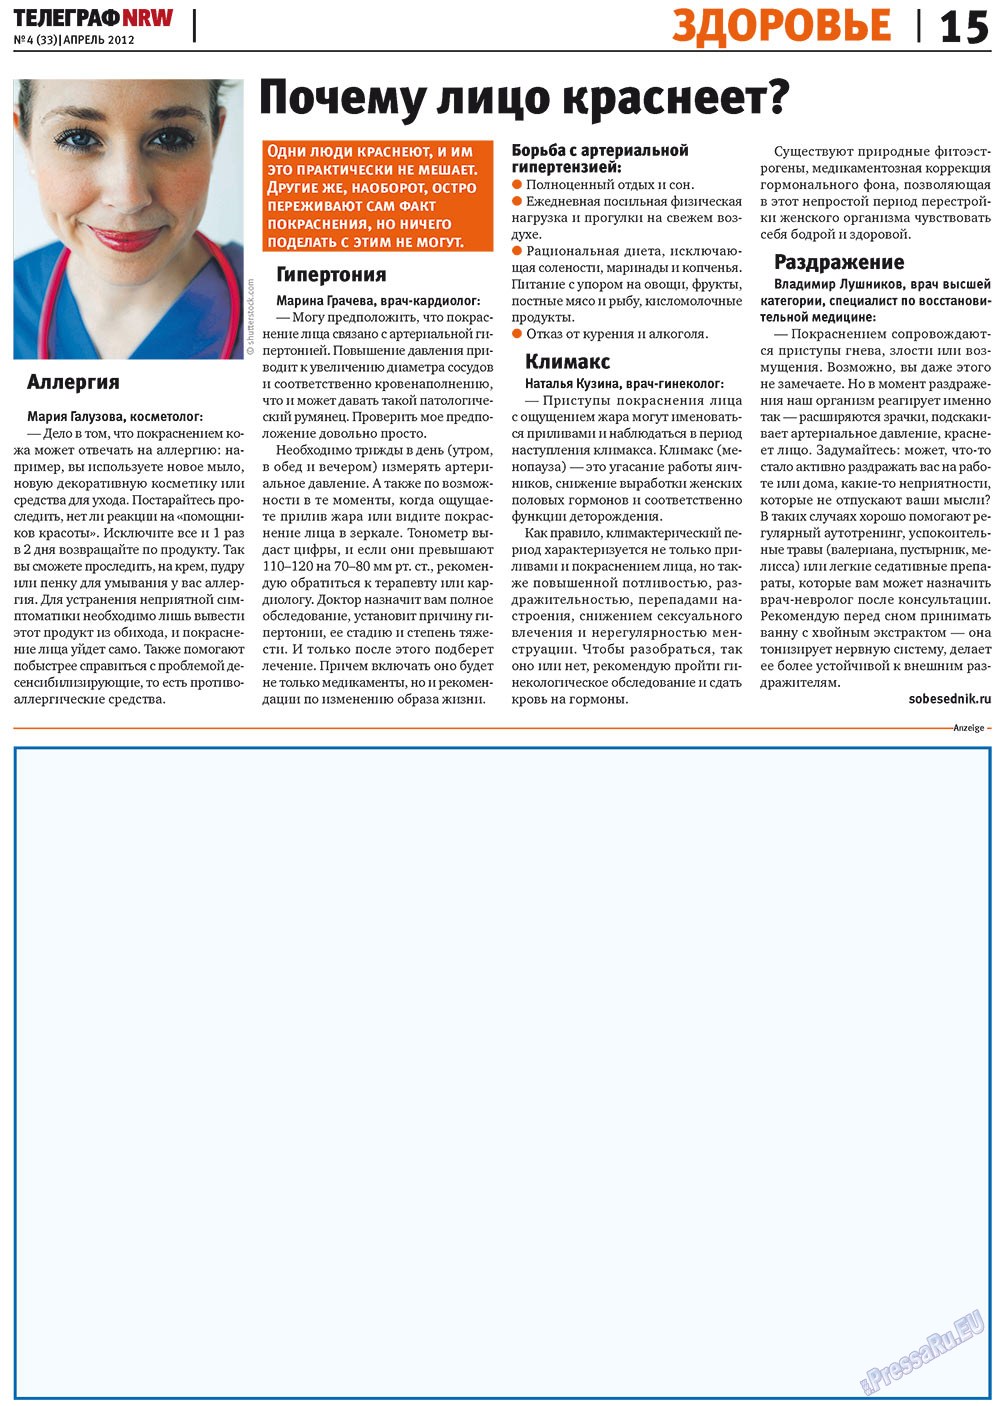 Телеграф NRW, газета. 2012 №4 стр.15